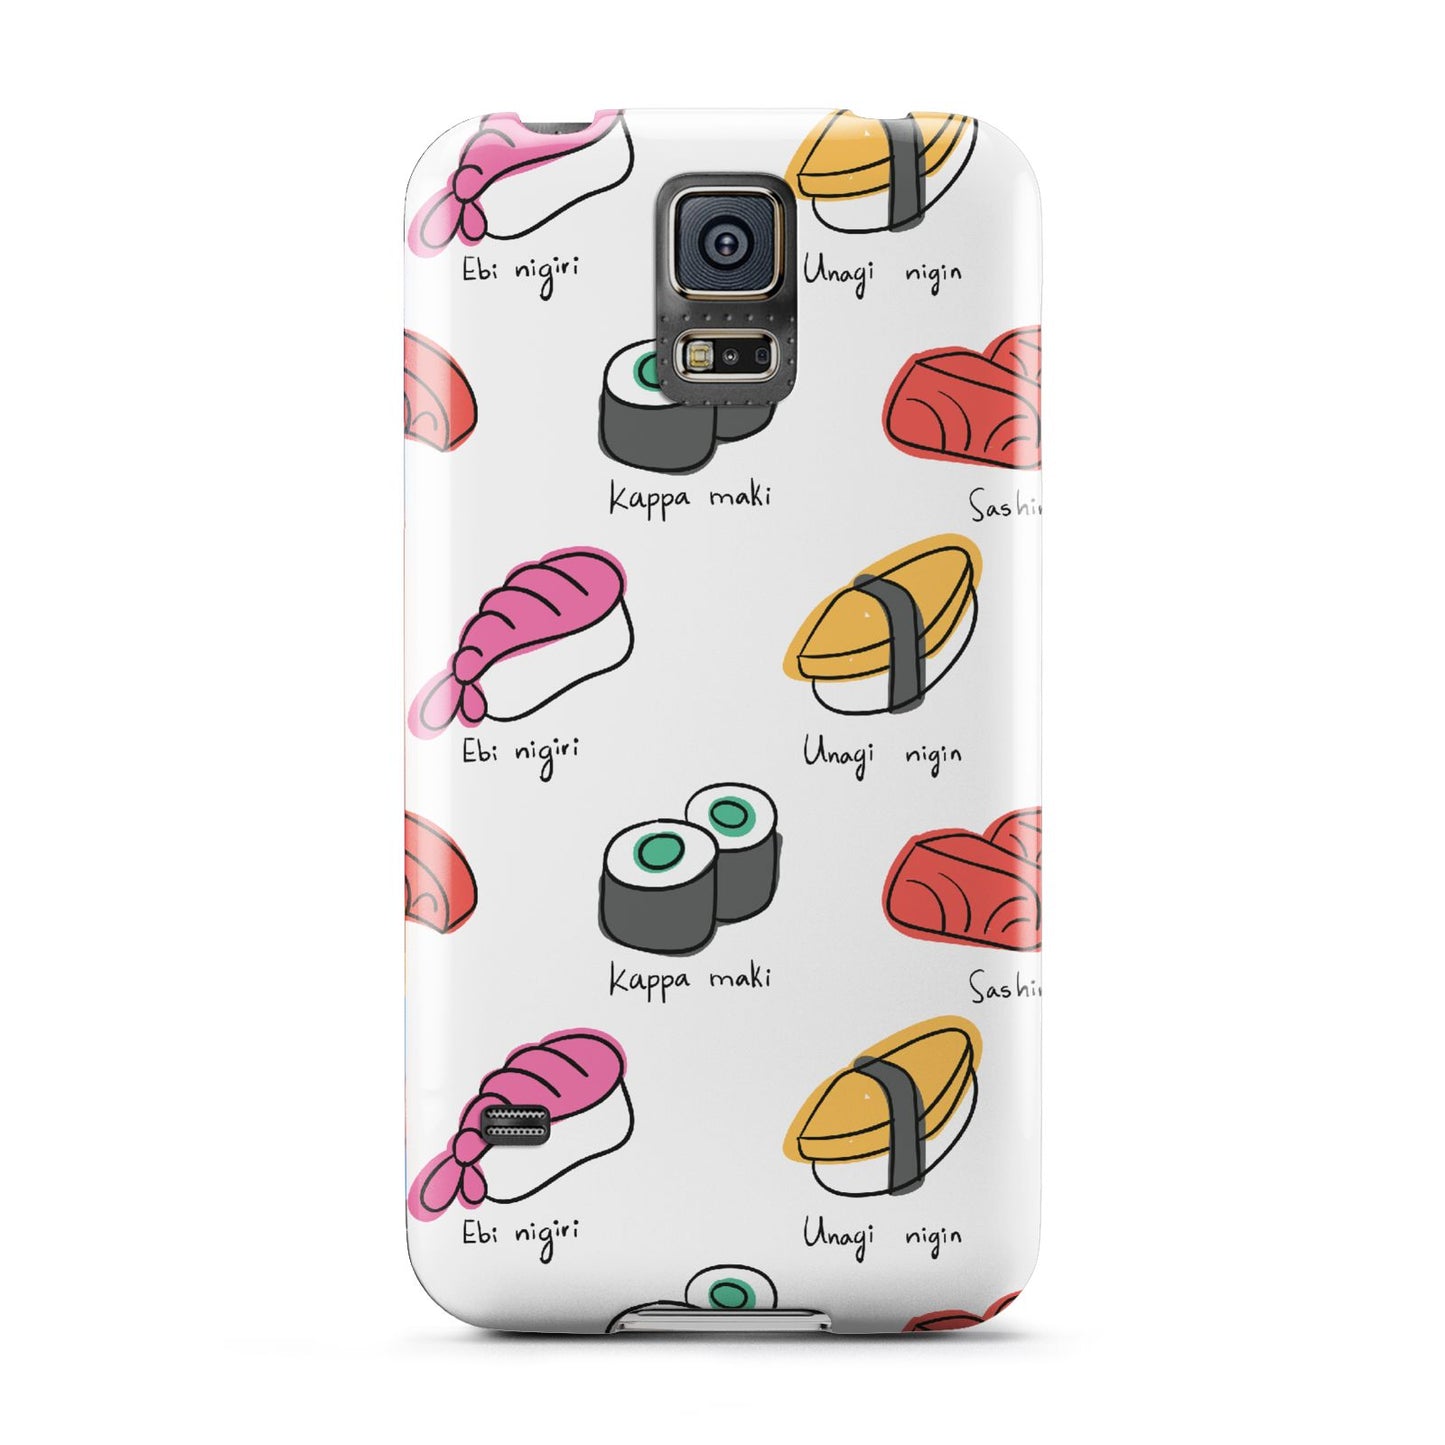 Sashimi Kappa Maki Sushi Samsung Galaxy S5 Case